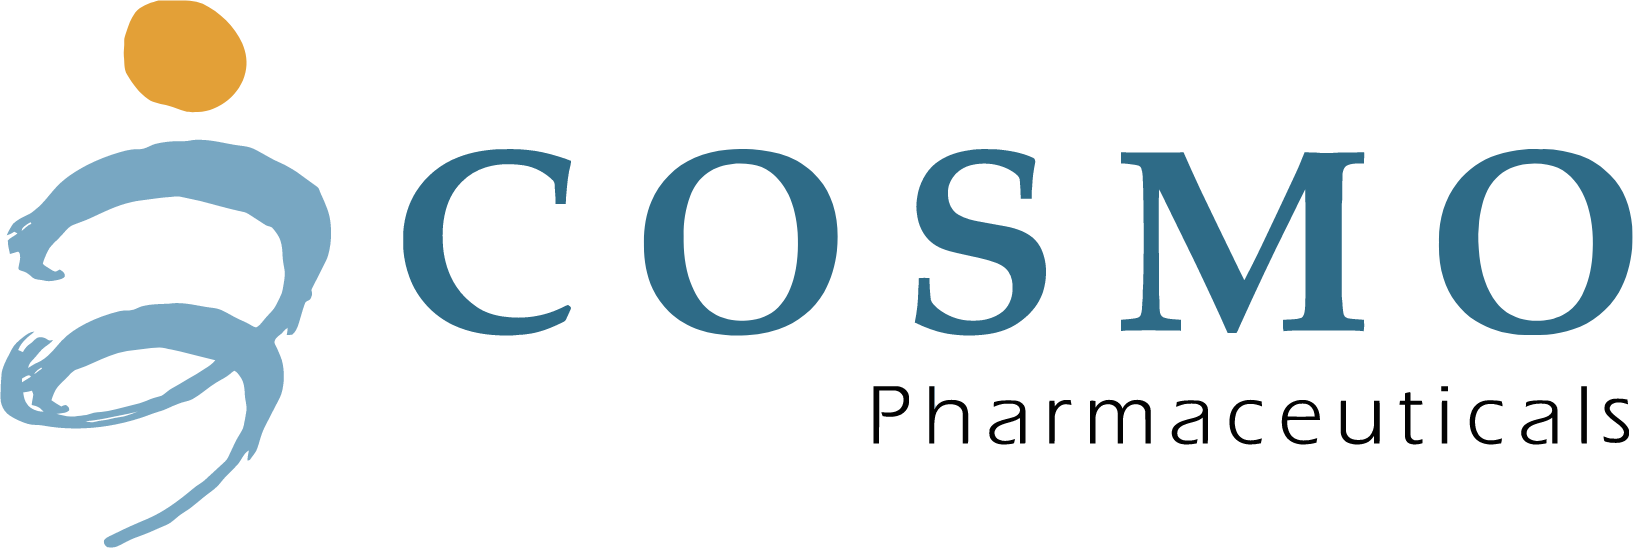 Cosmo Pharmaceuticals logo large (transparent PNG)